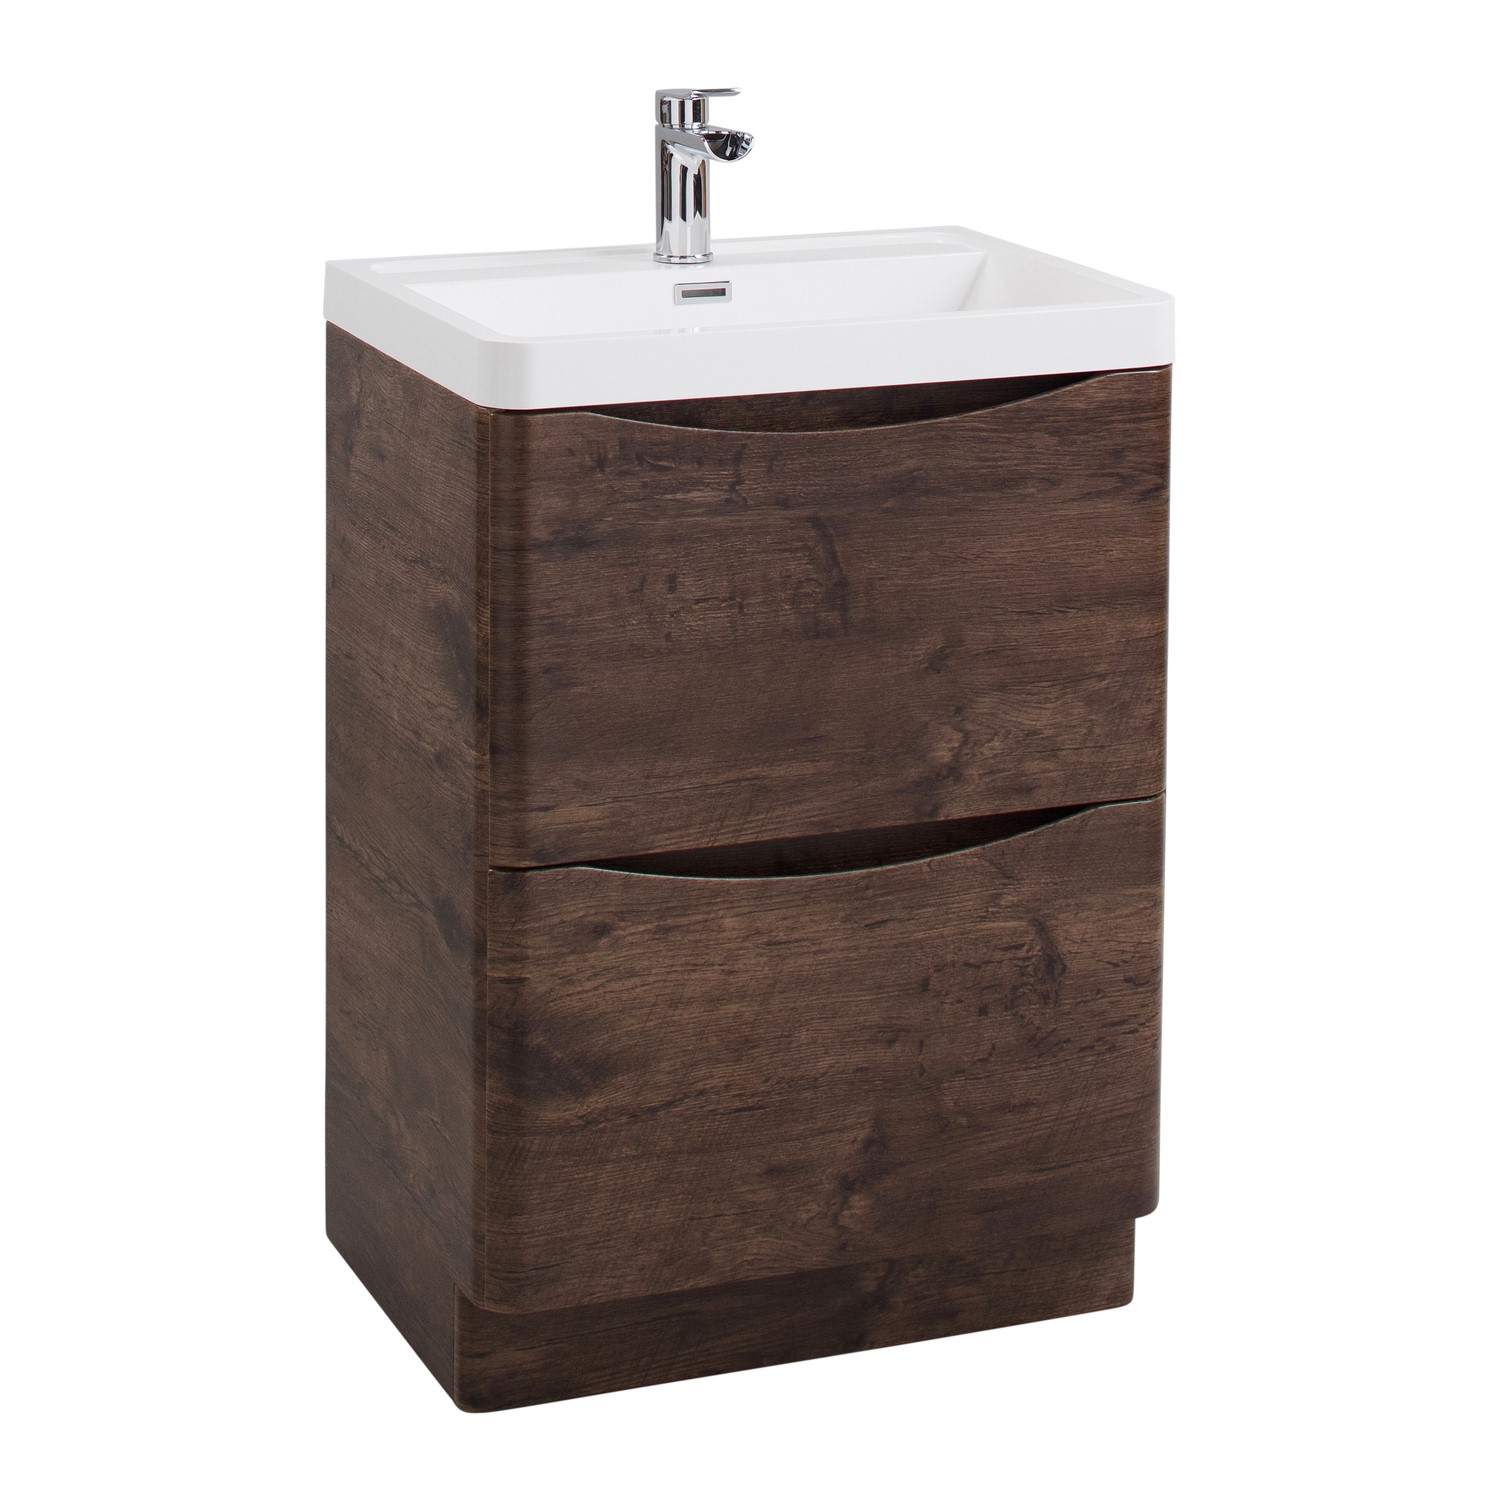 Walnut Free Standing Bathroom Vanity Unit & Basin - W600mm - Furniture123